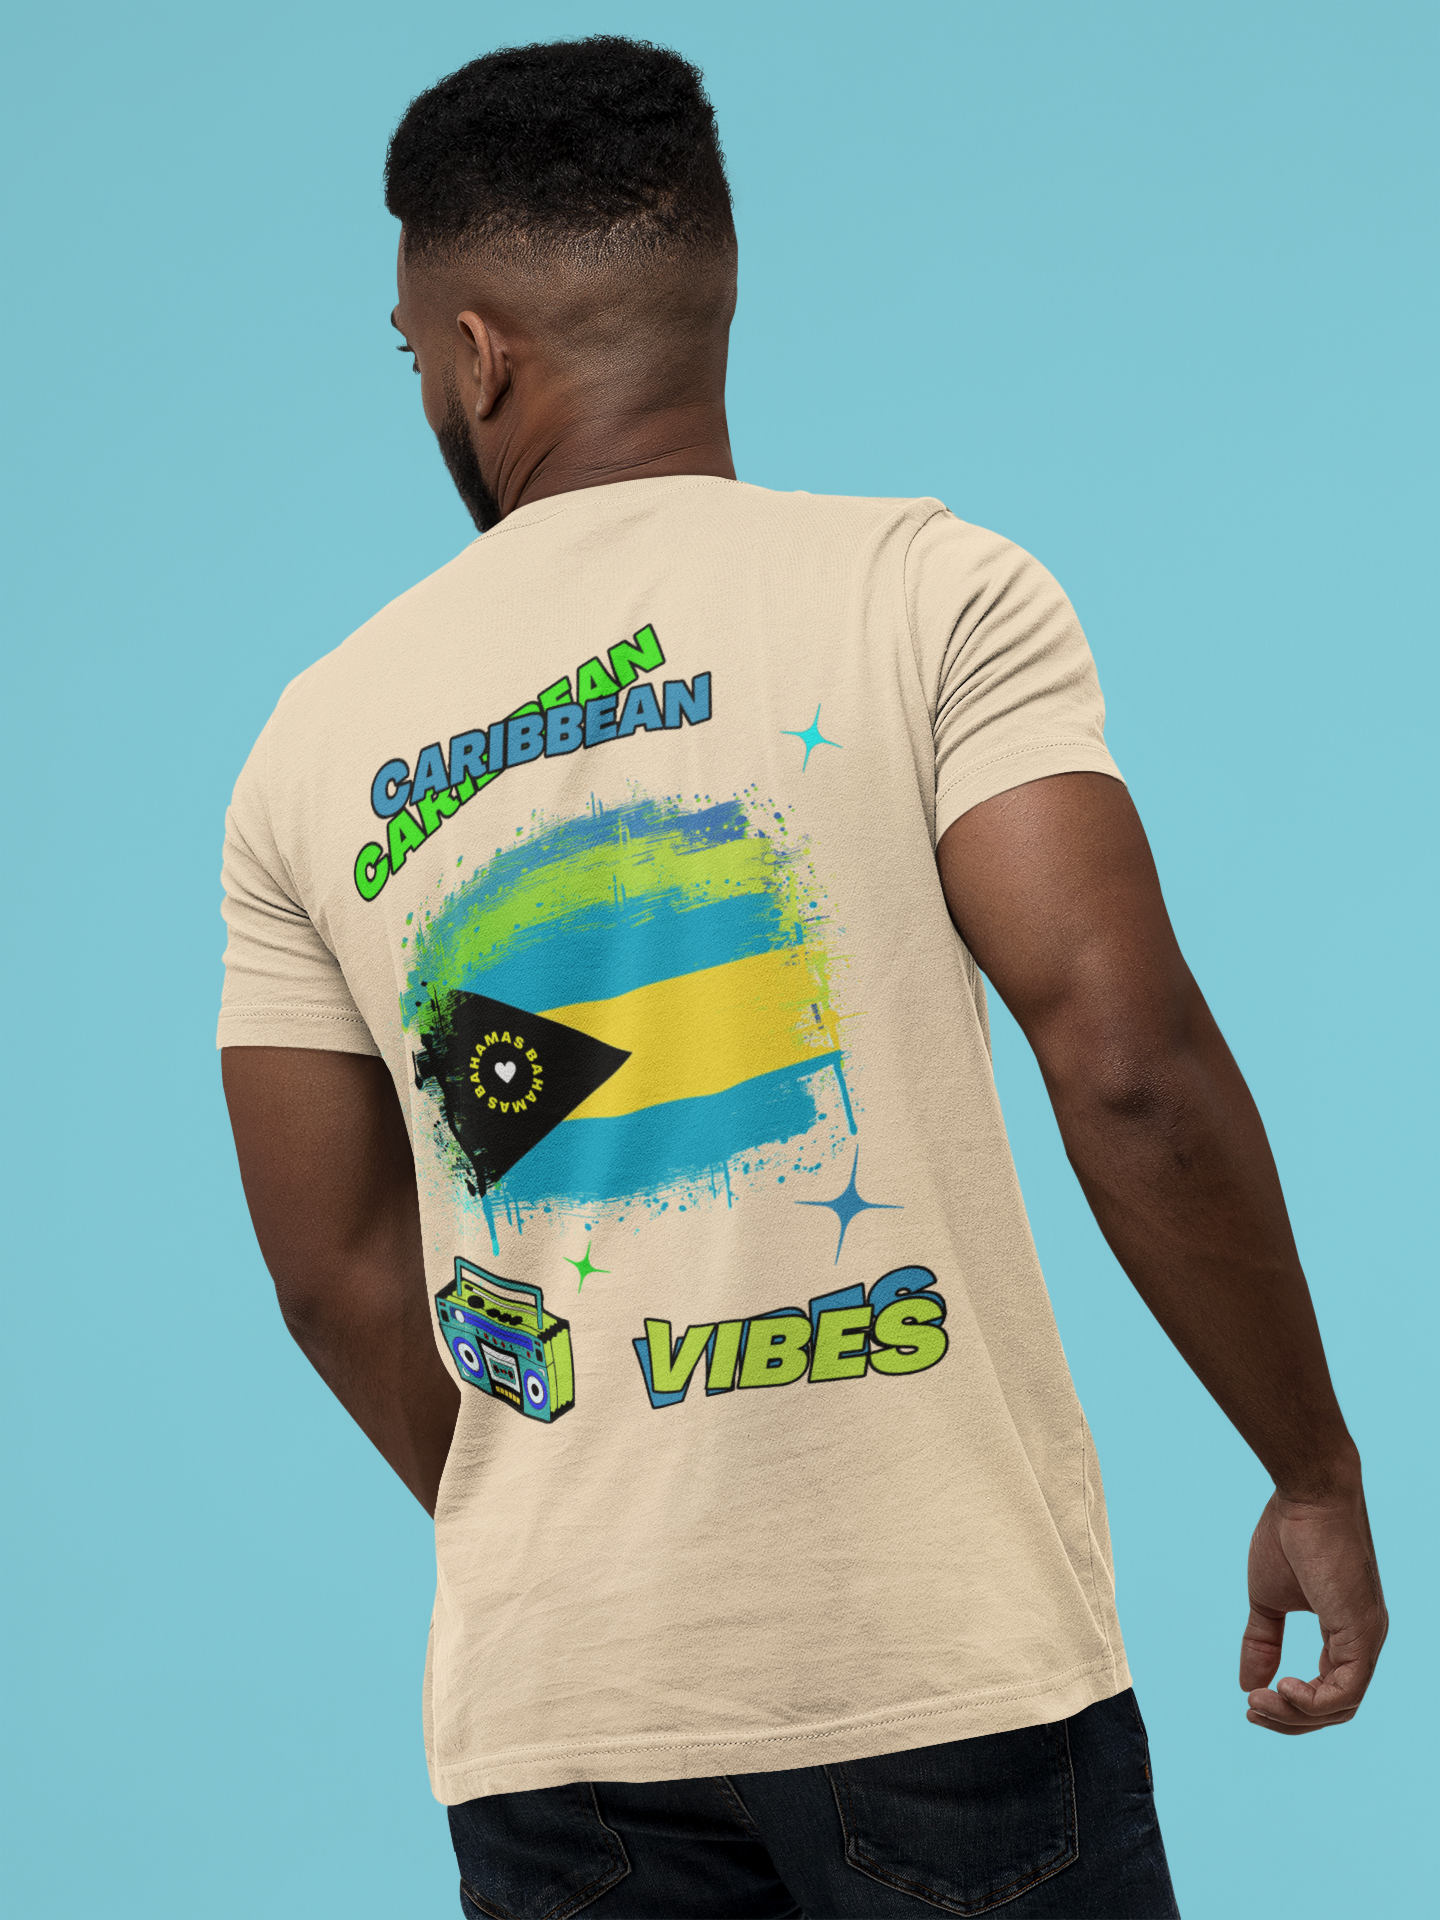 Adult Caribbean Vibes T-shirt - Bahamas